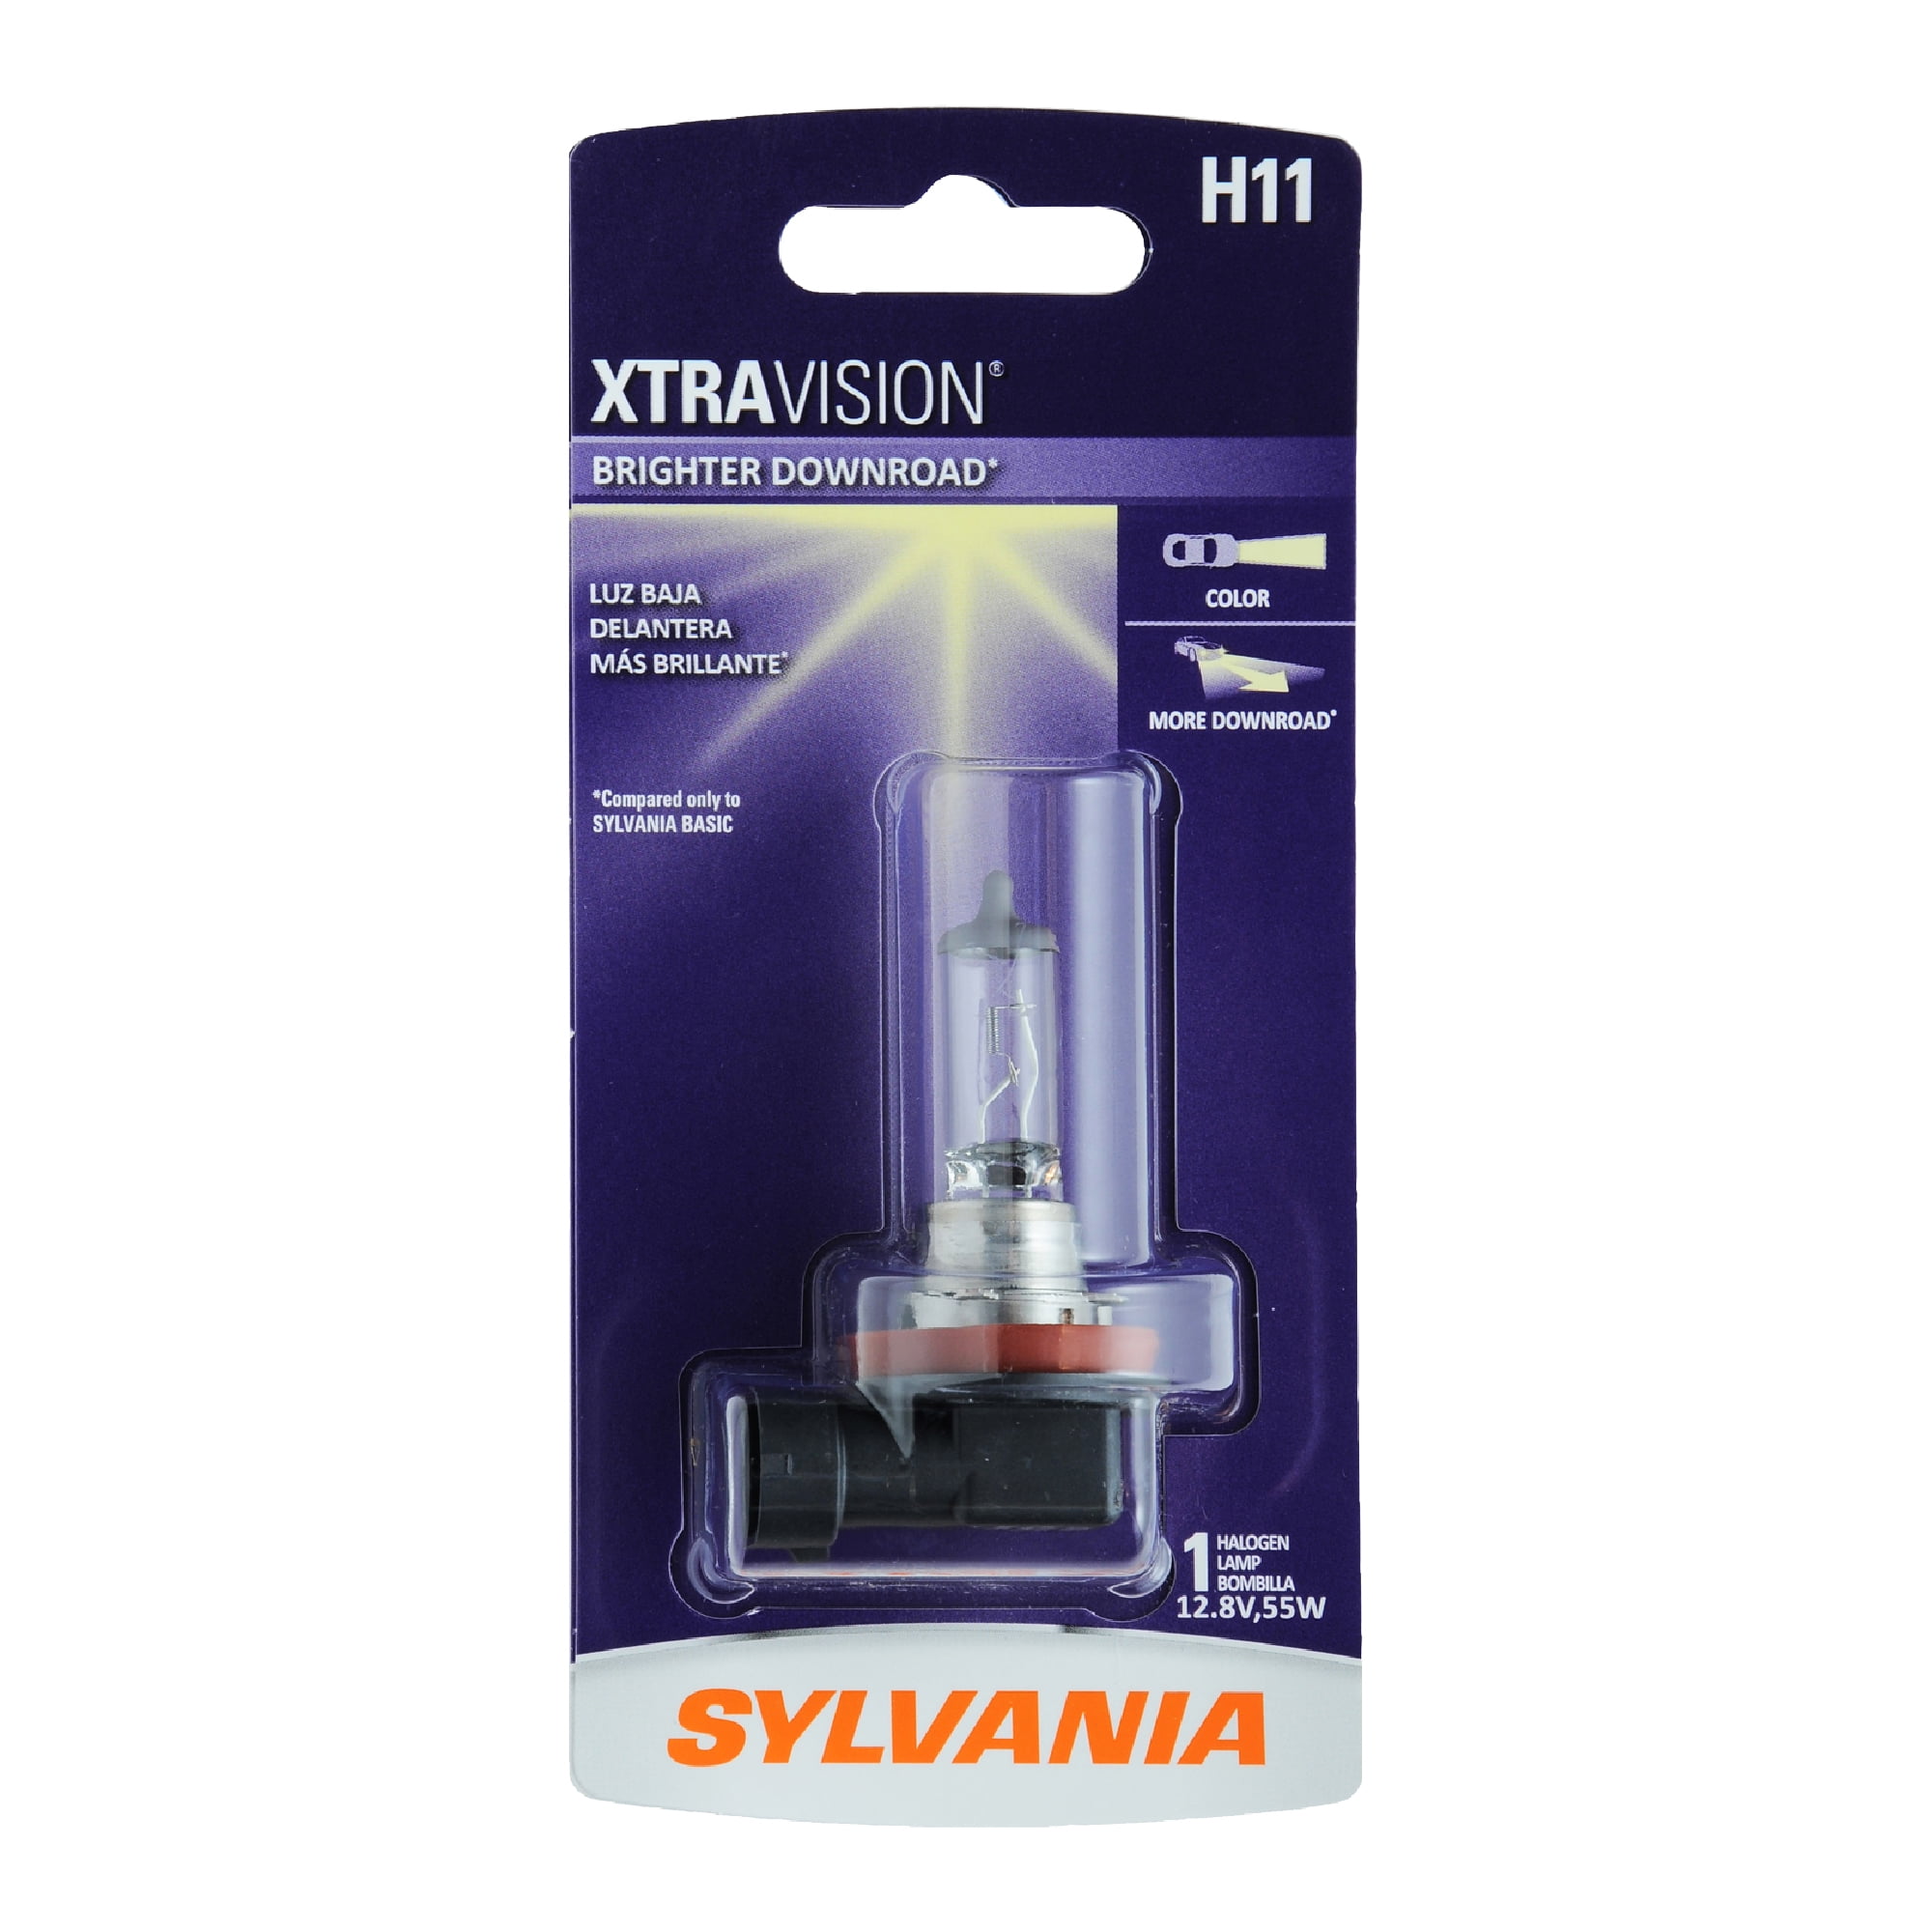 Sylvania H11 XtraVision Halogen Headlight Bulb, Pack of 1